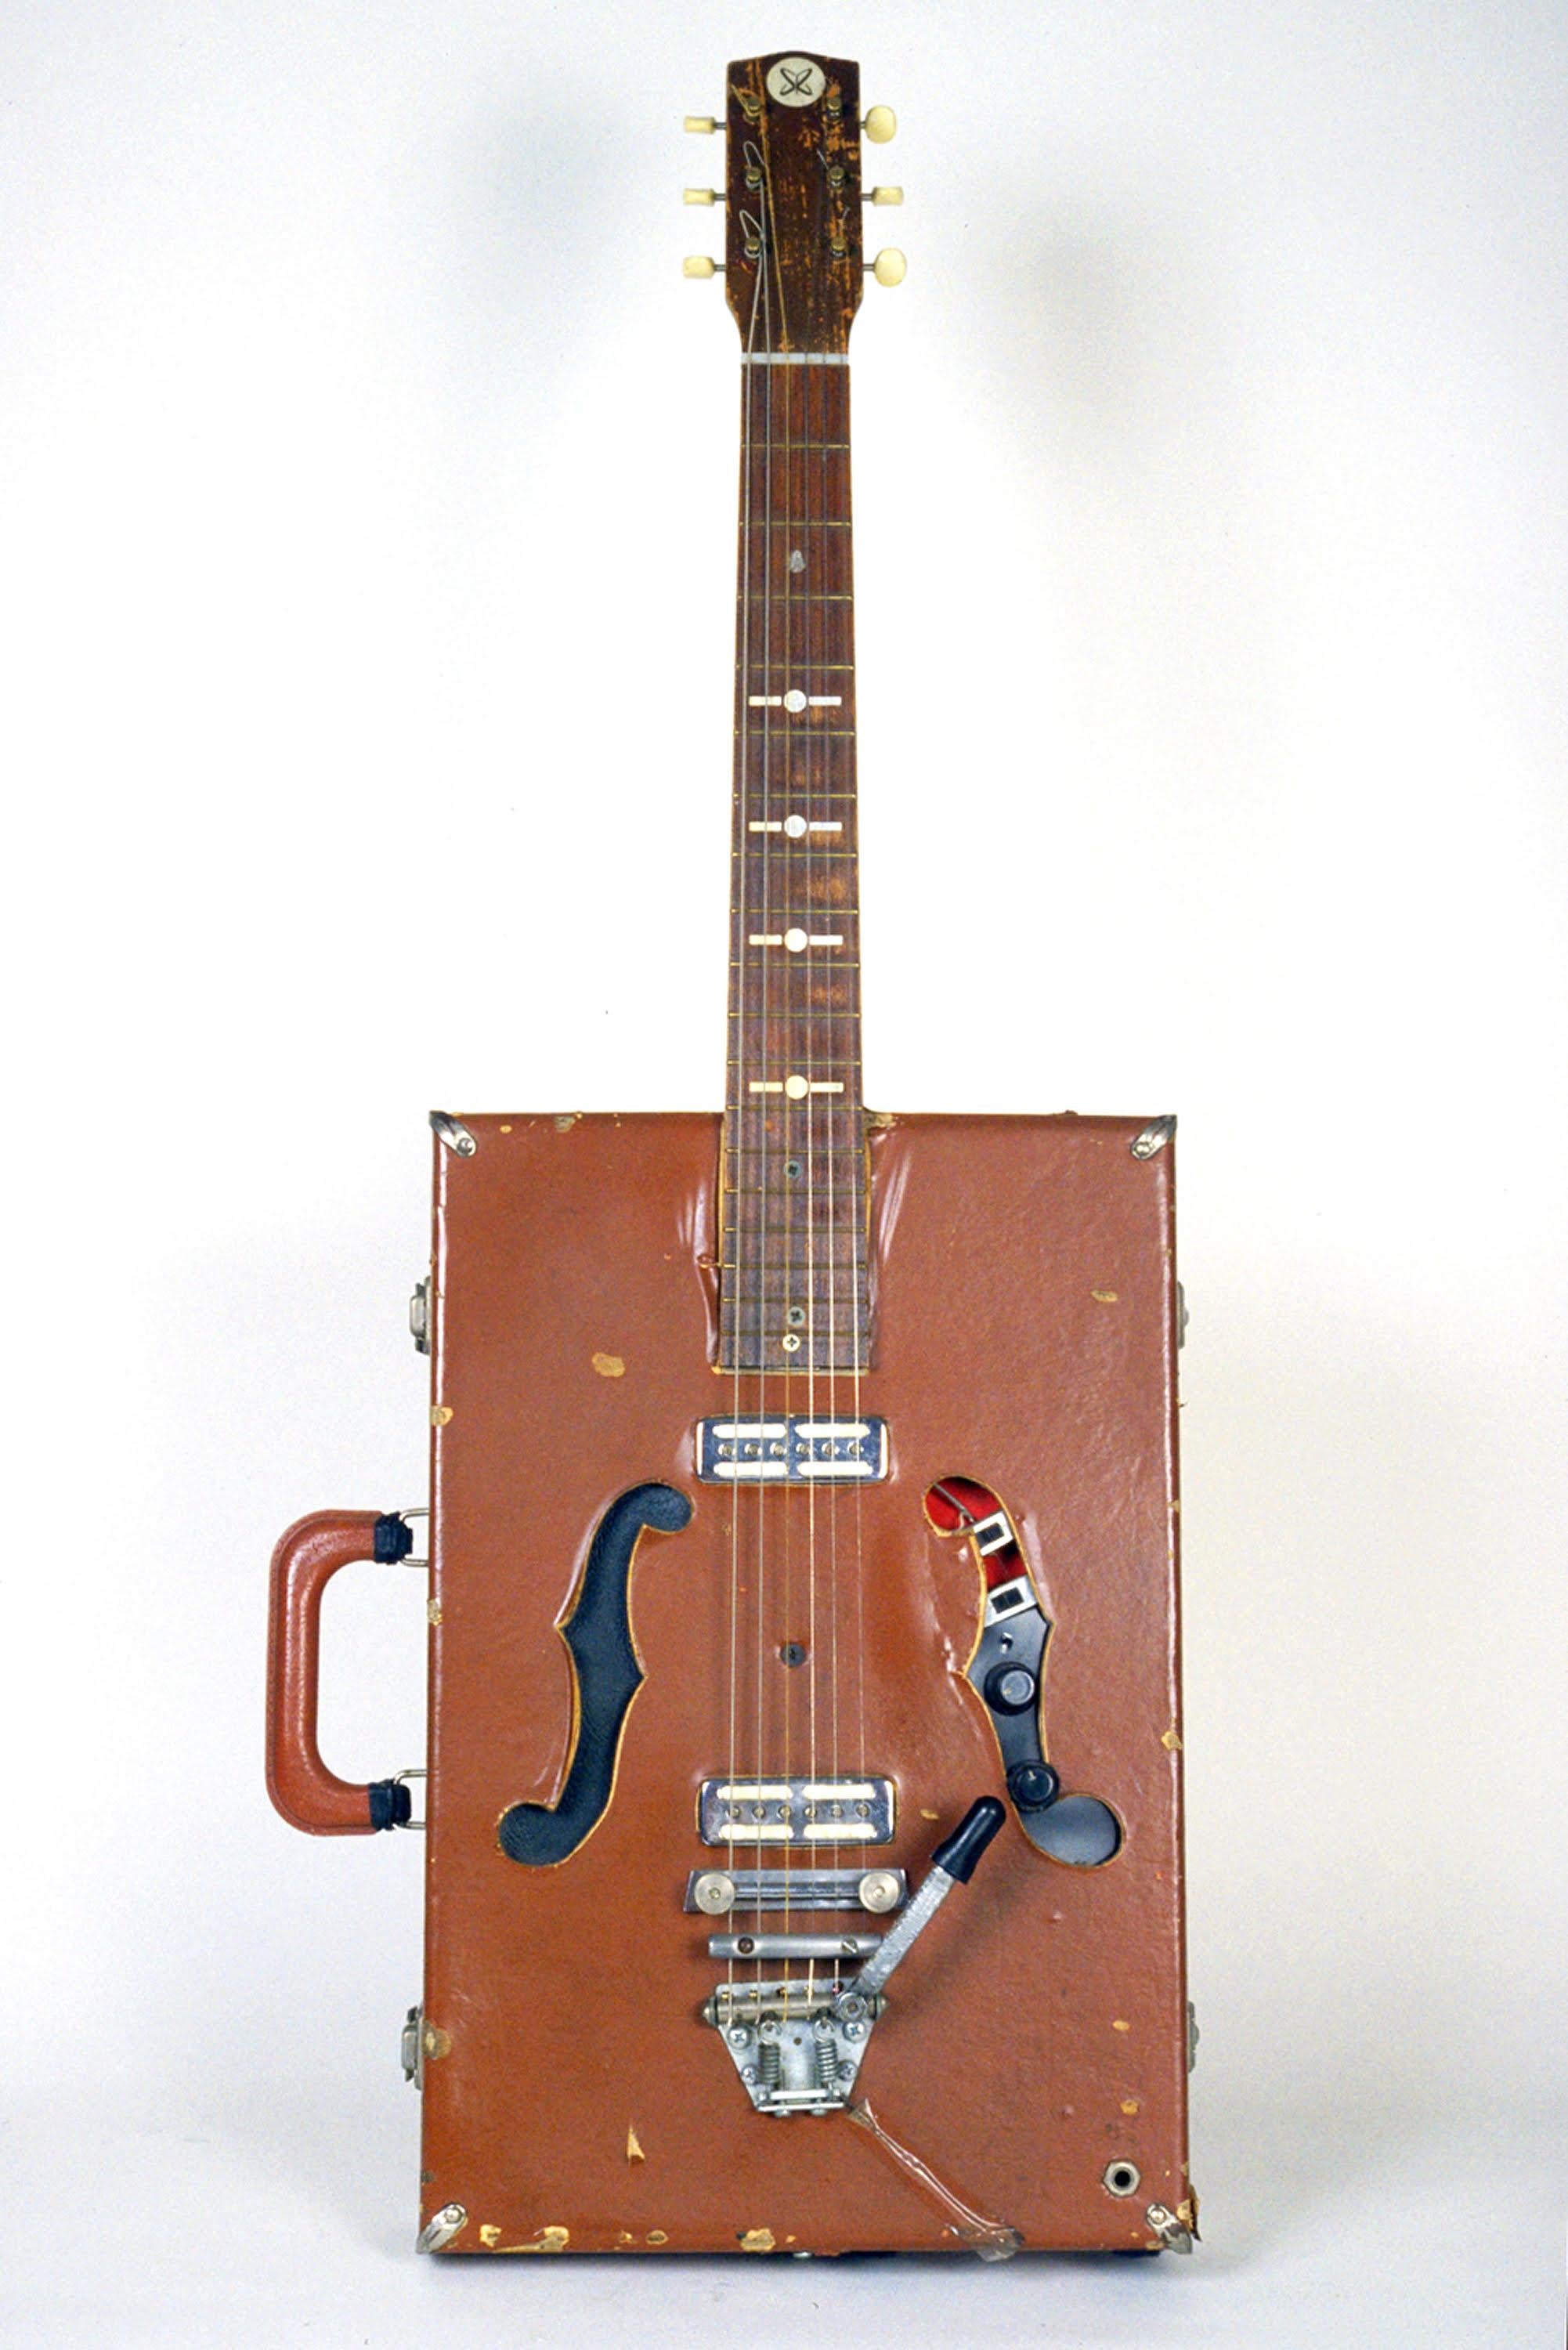 Ken Butler Figurative Sculpture - "Briefcase Guitar" hybrid musical instrument sculpture, assemblage